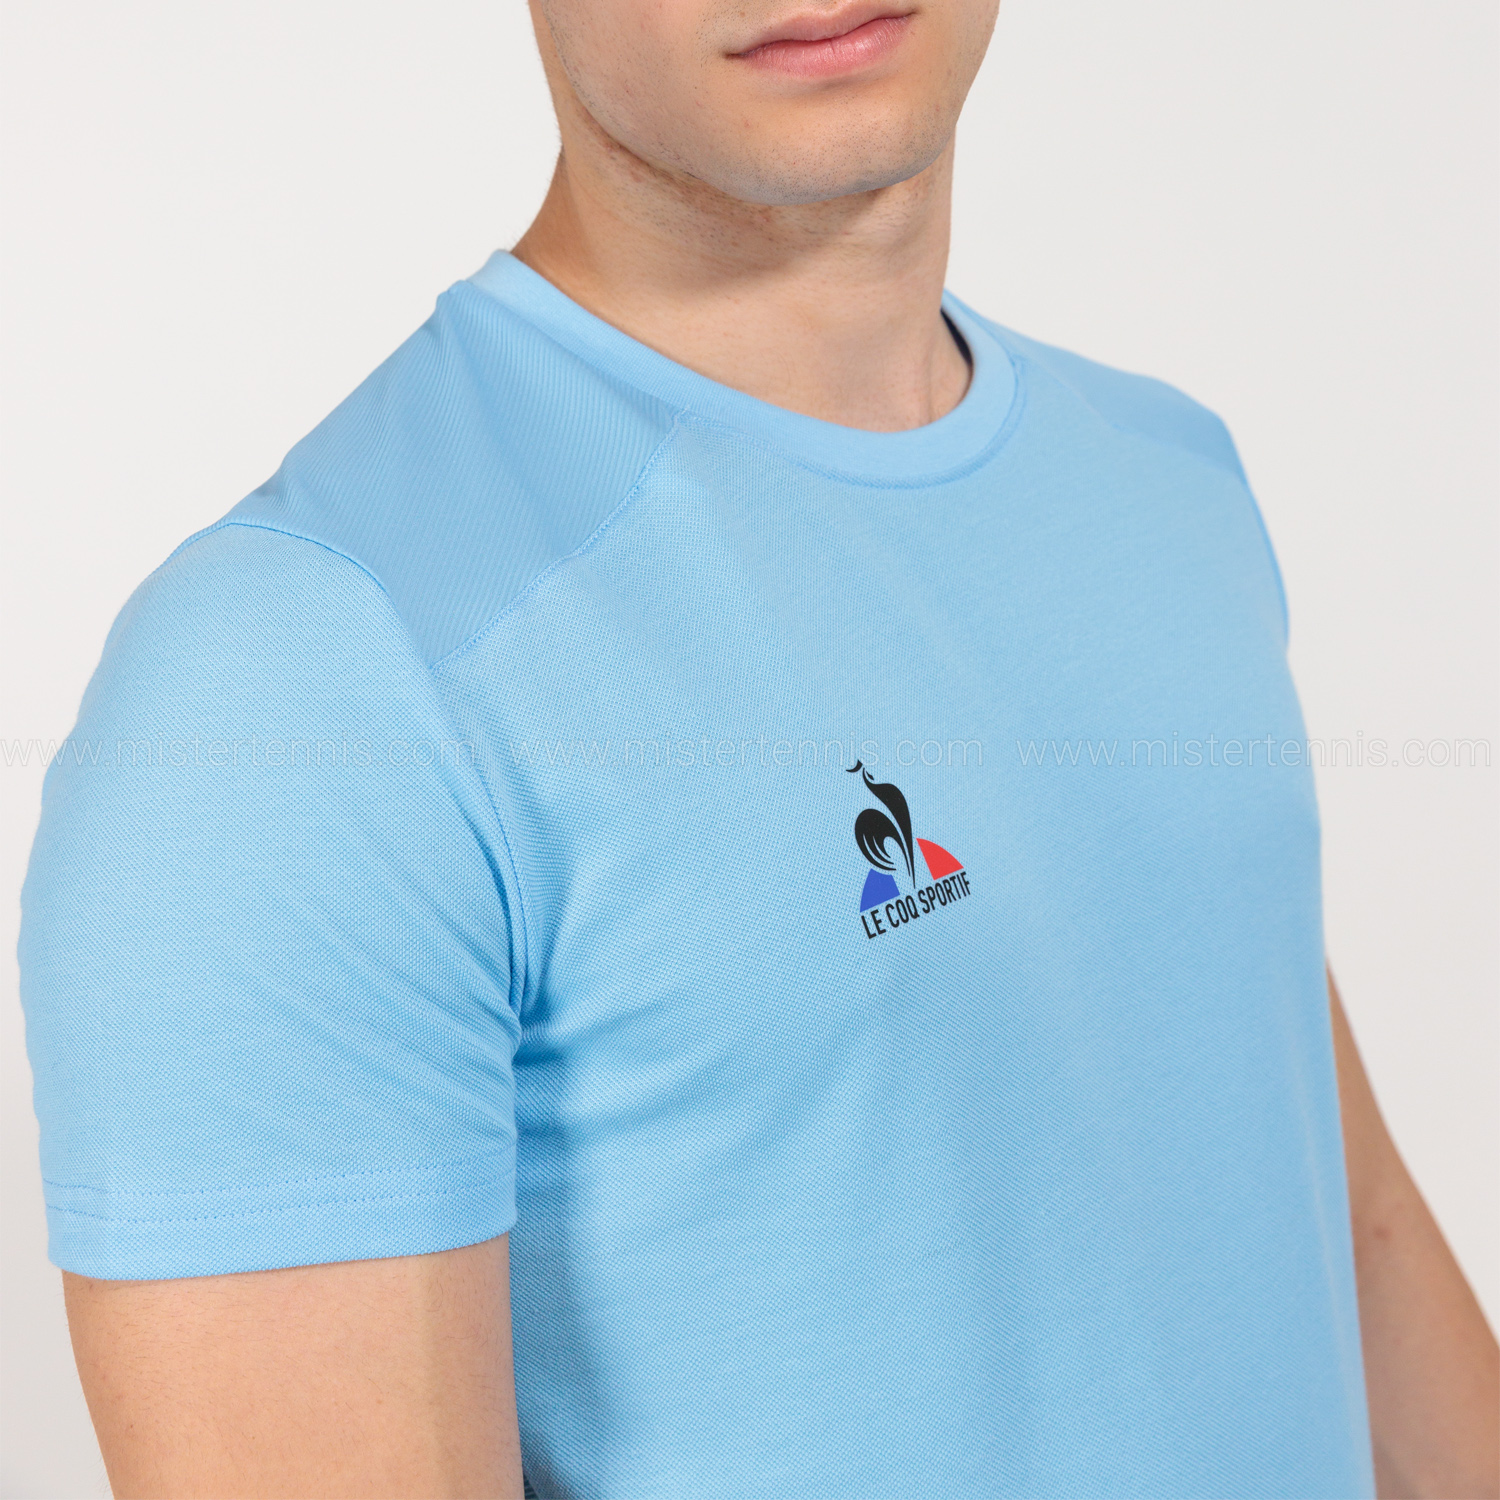 Le Coq Sportif Performance Camiseta - Flye Blue